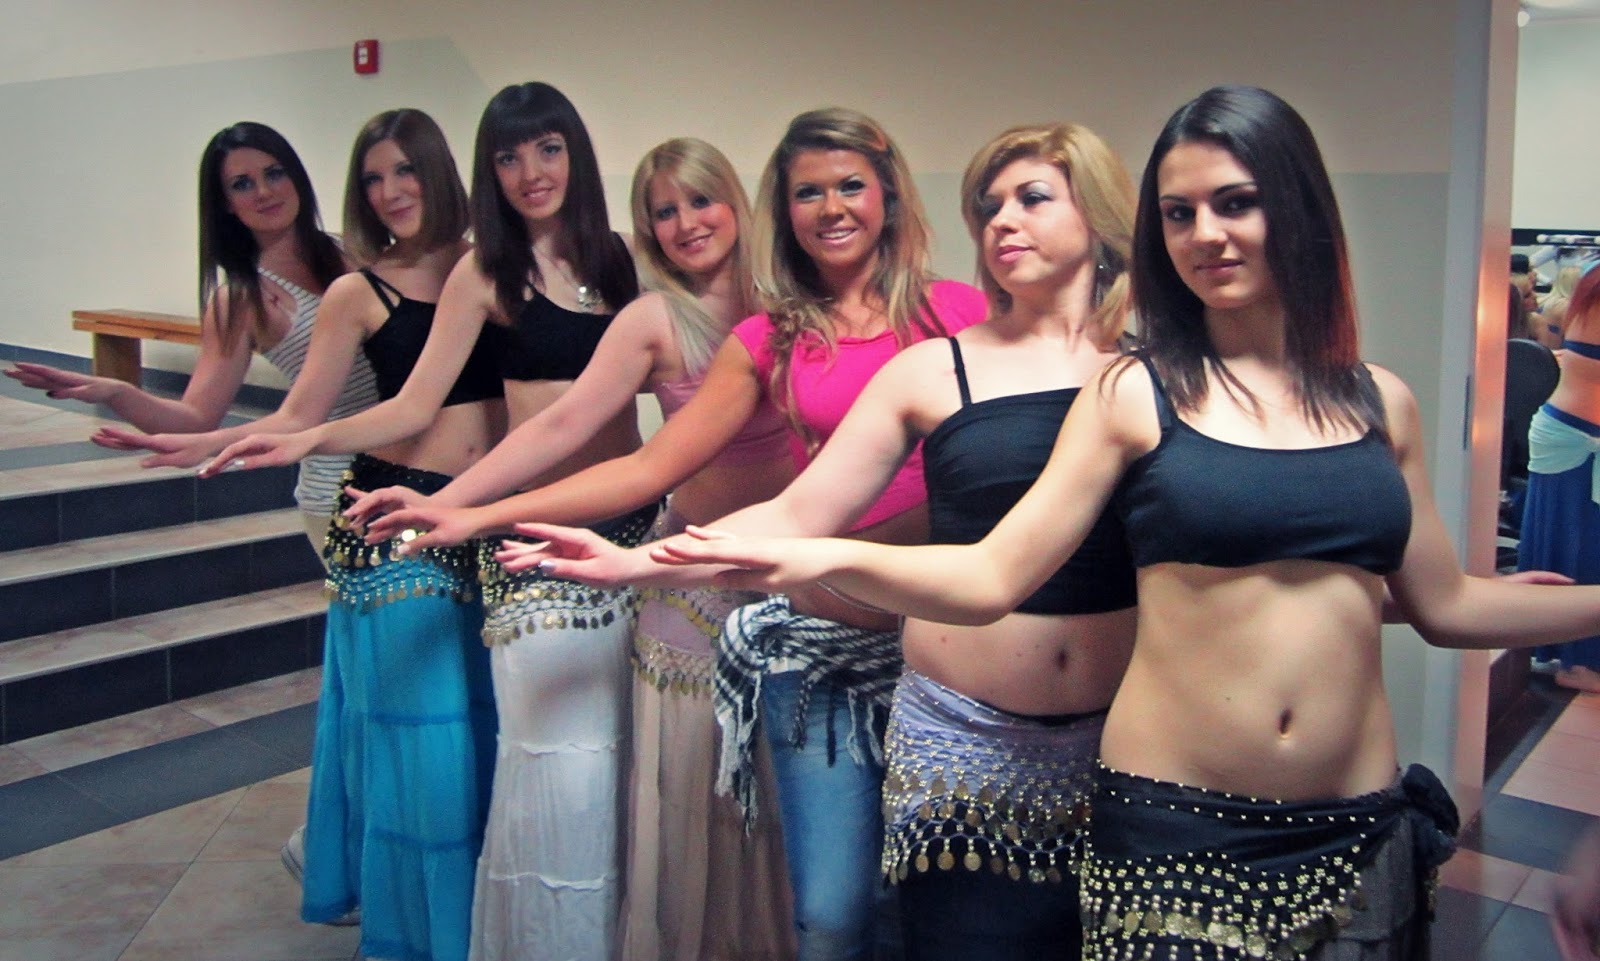 Početna grupa i Sonja, april 2013. Gala Show plesne škole Azar, Novi Sad